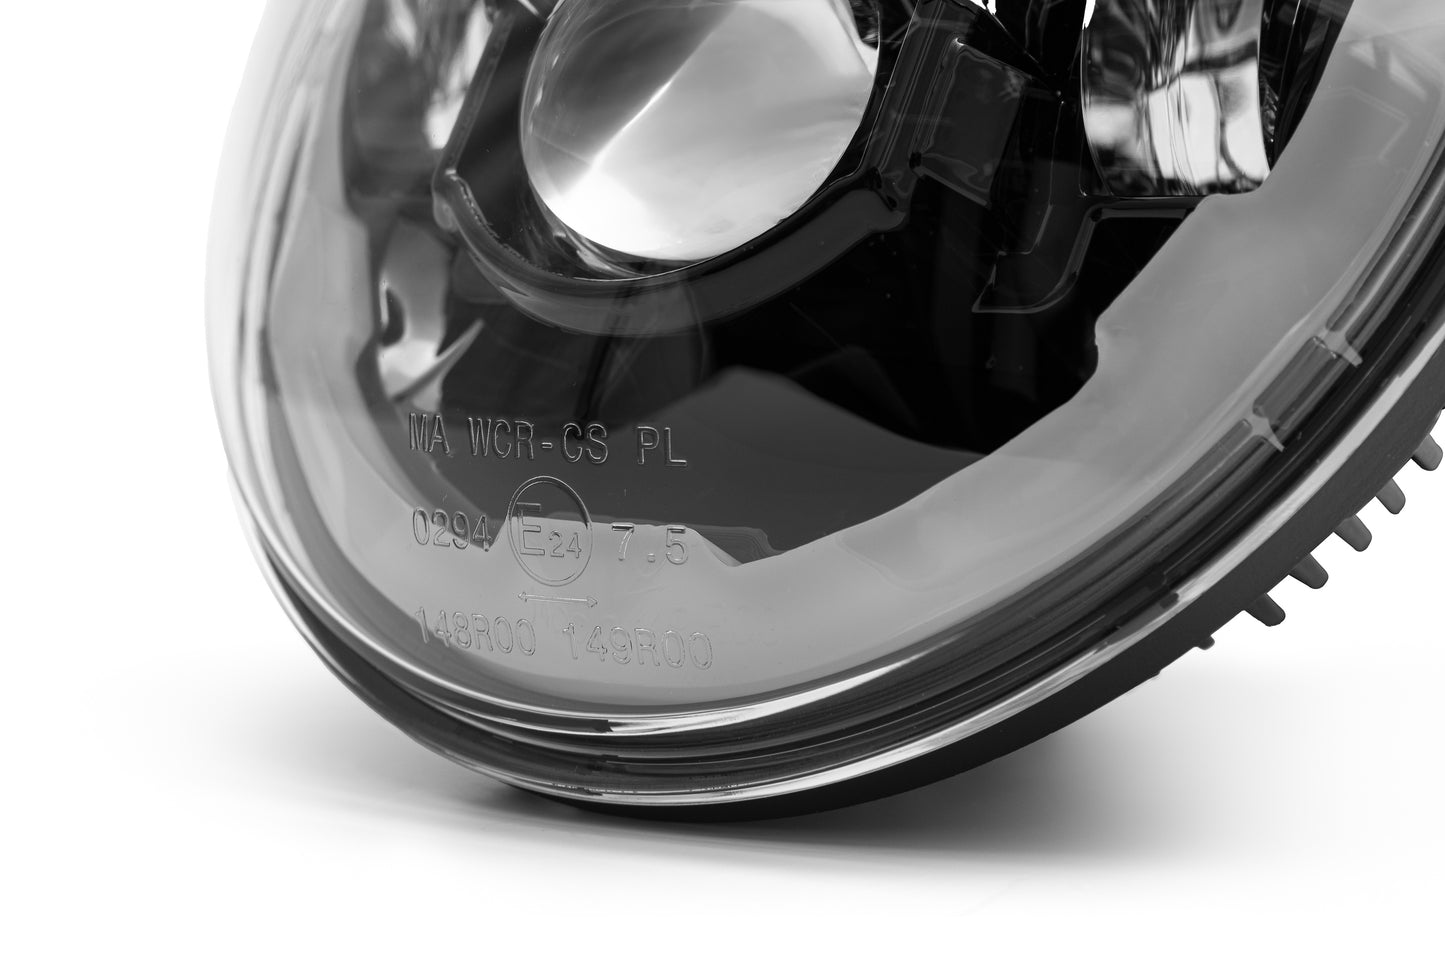 Zoomed Harley Davidson headlight with parking light by Killer Custom white background